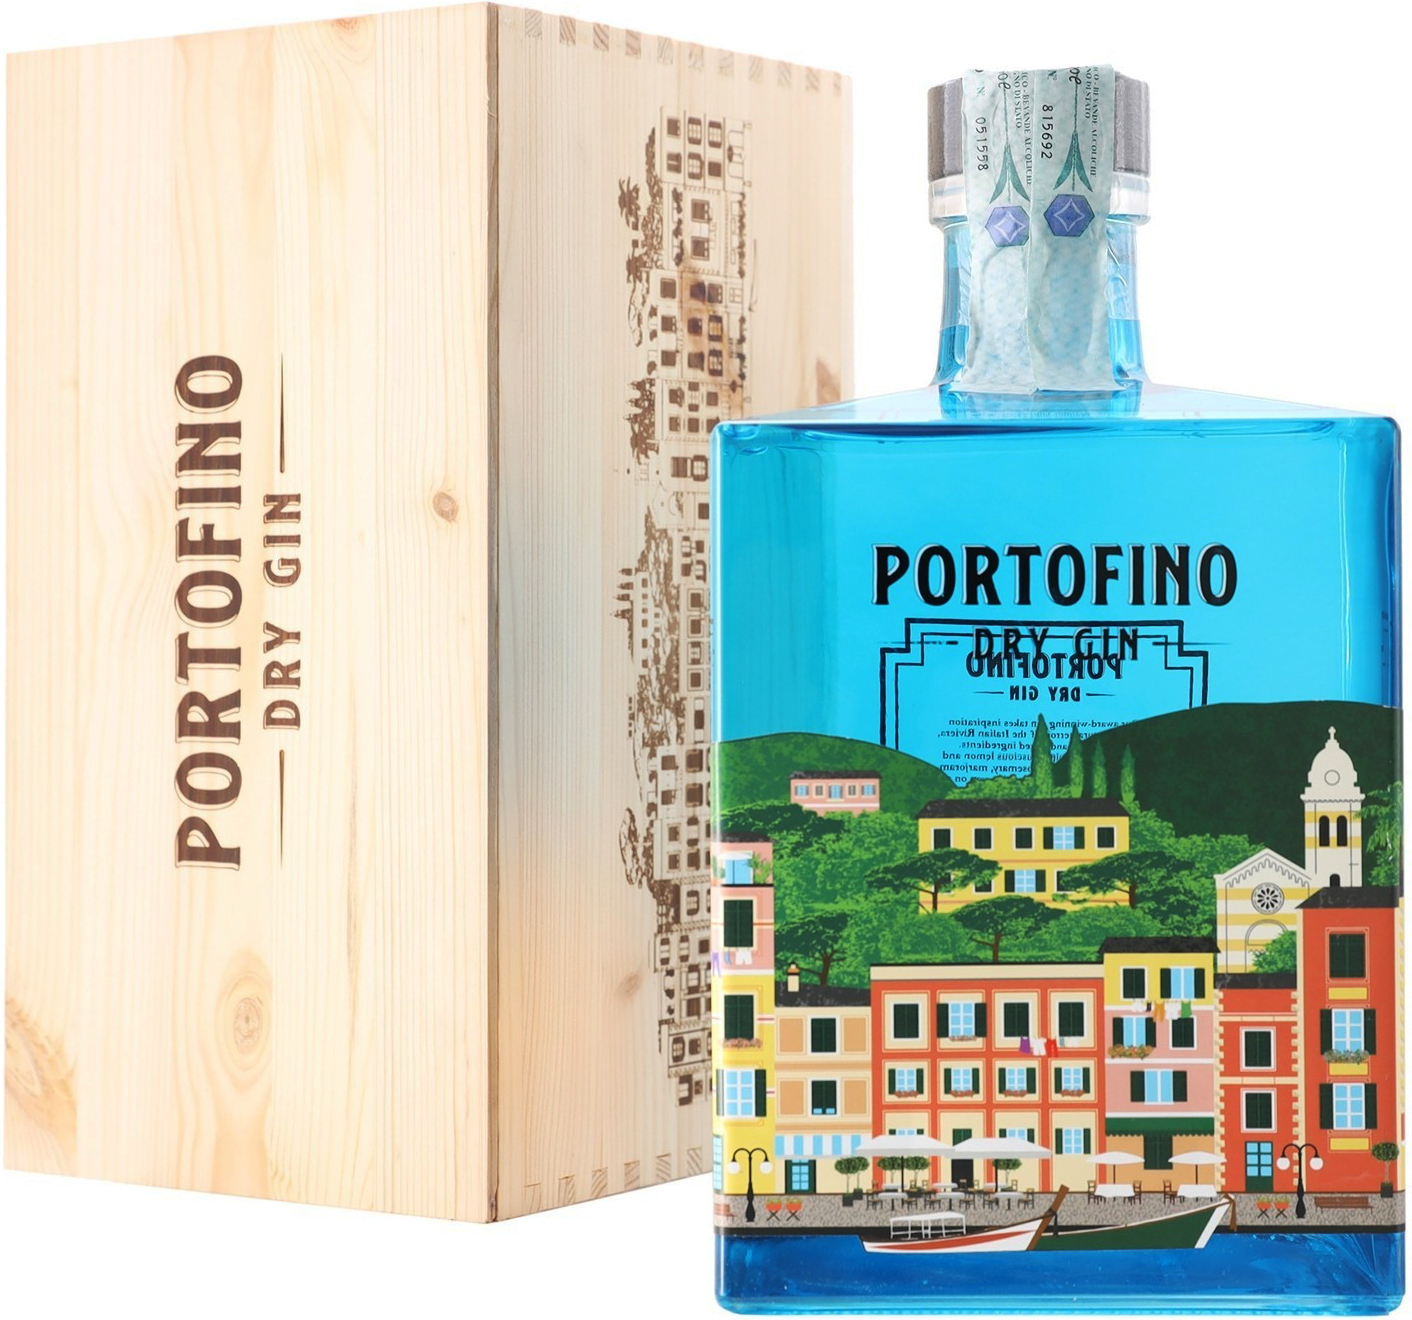 Portofino Dry Gin 5l - Gin